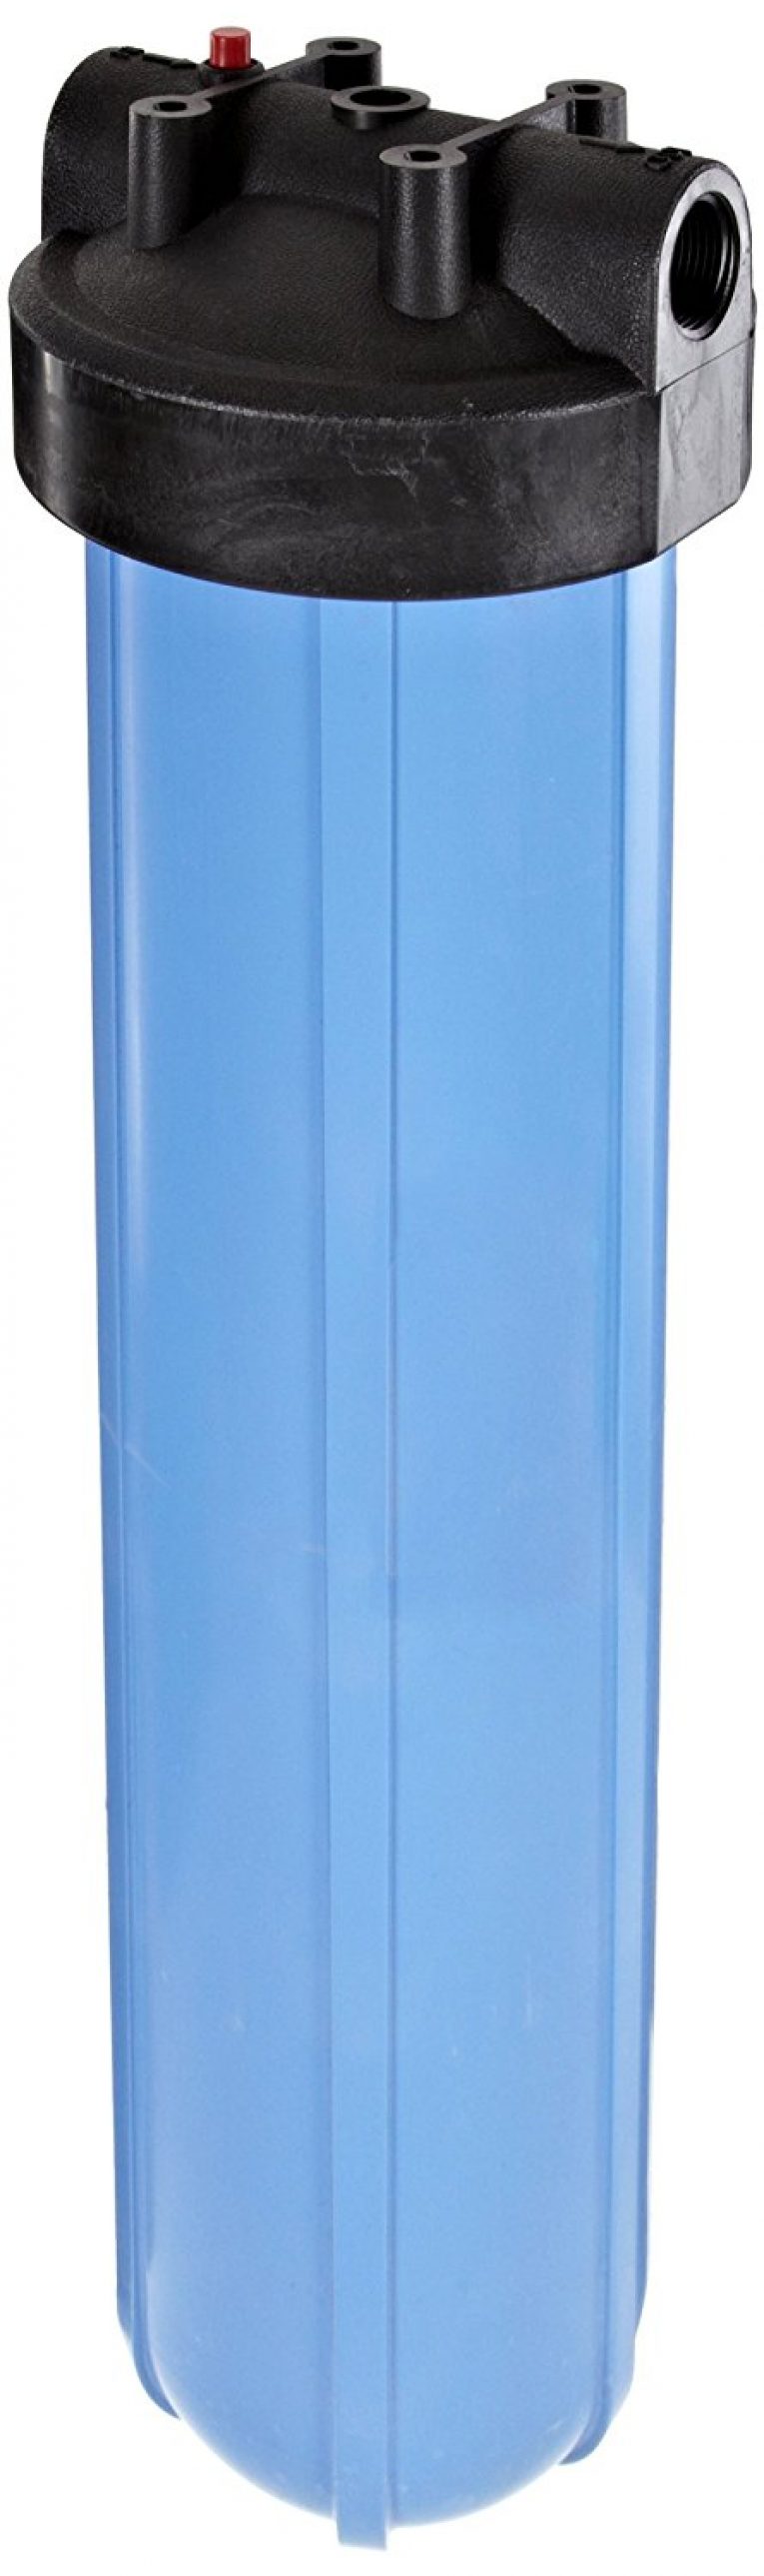 Pentek 150233 Big Blue Water Filter